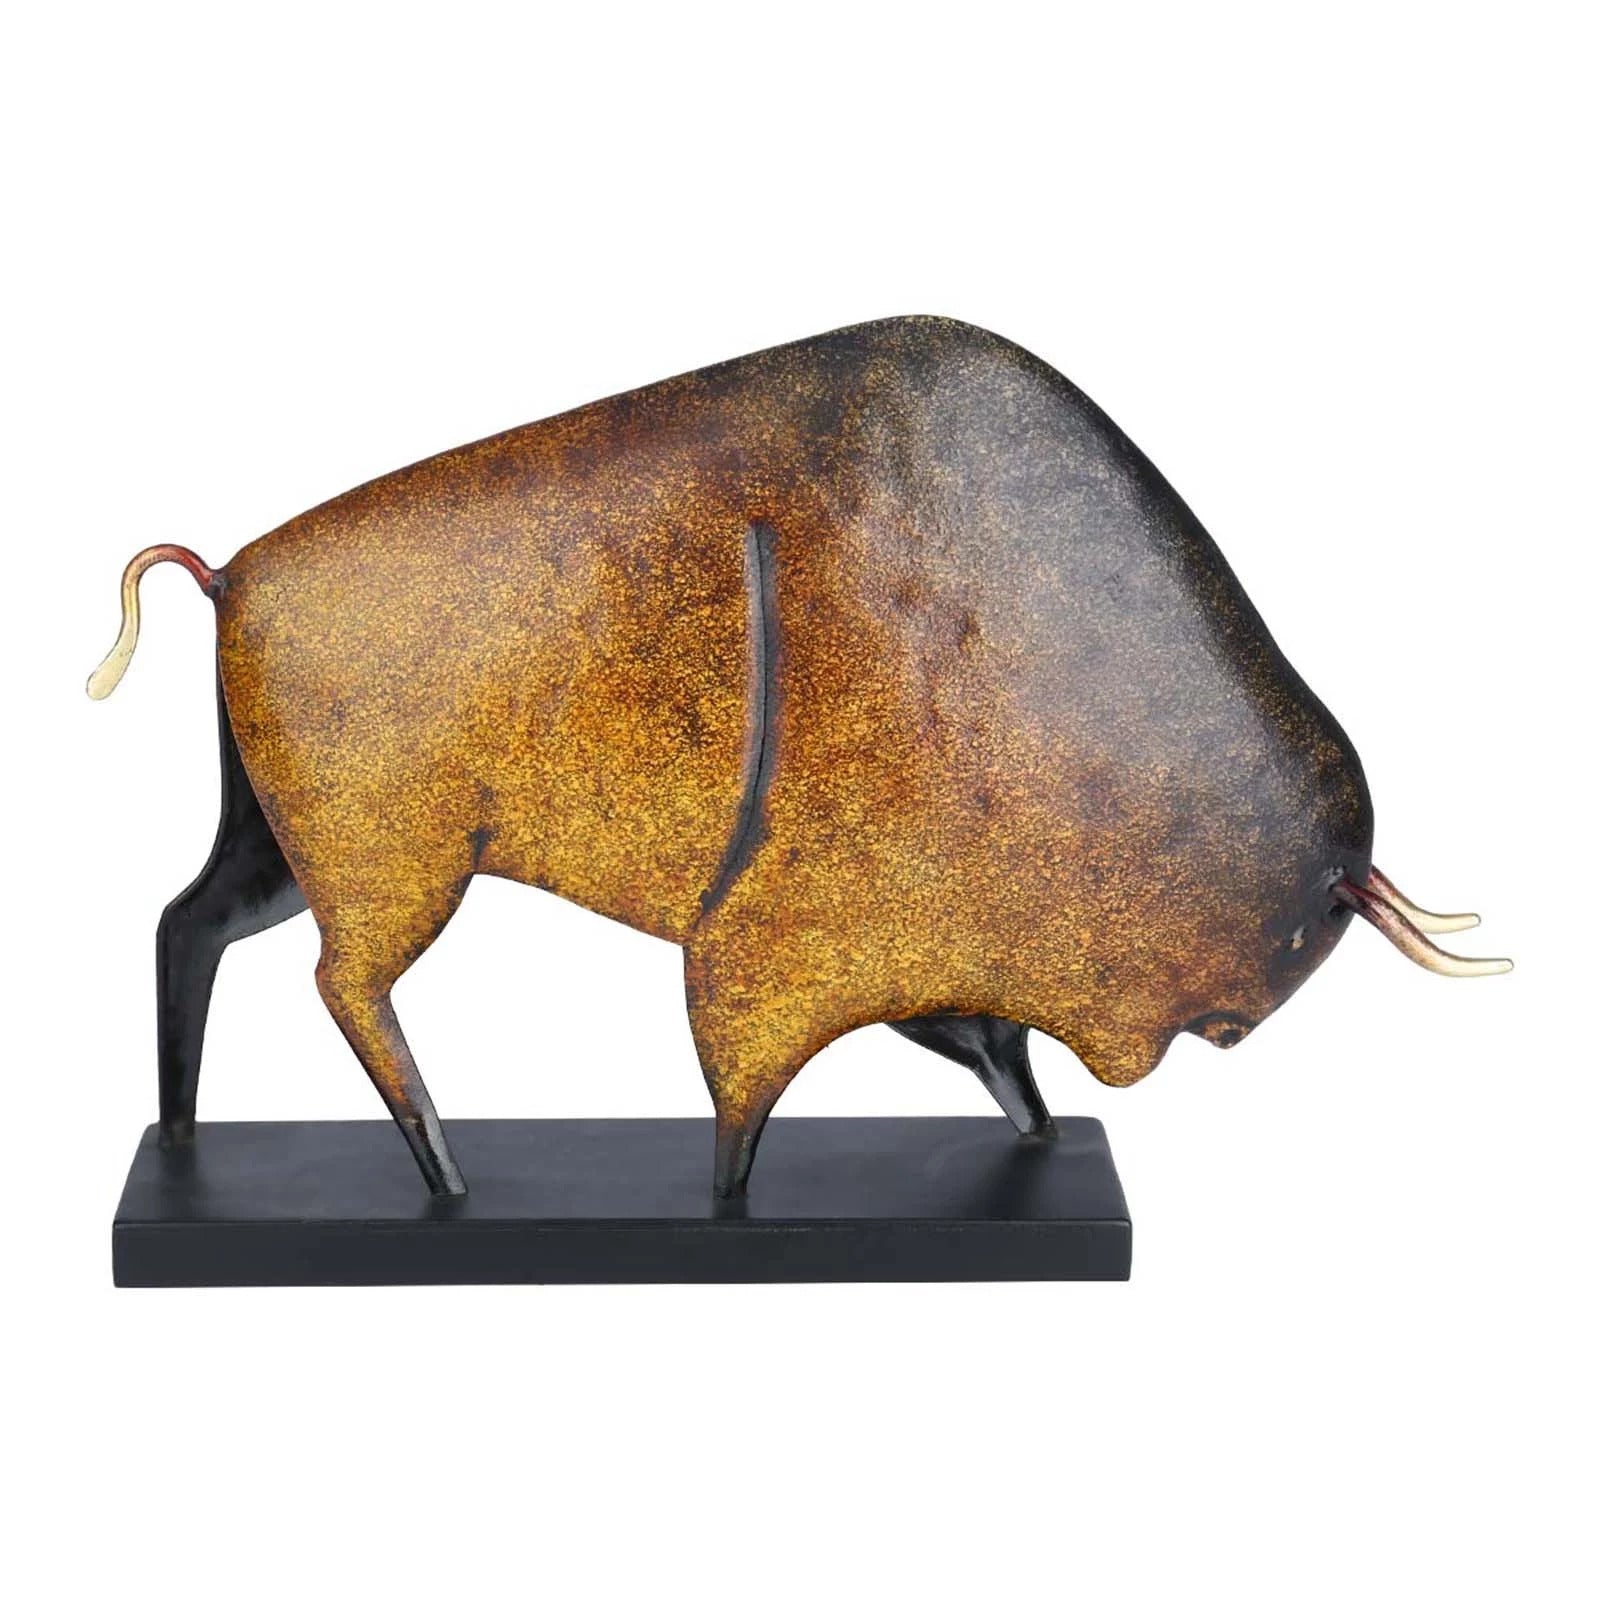 Buffalo Decor and Bull Figurines